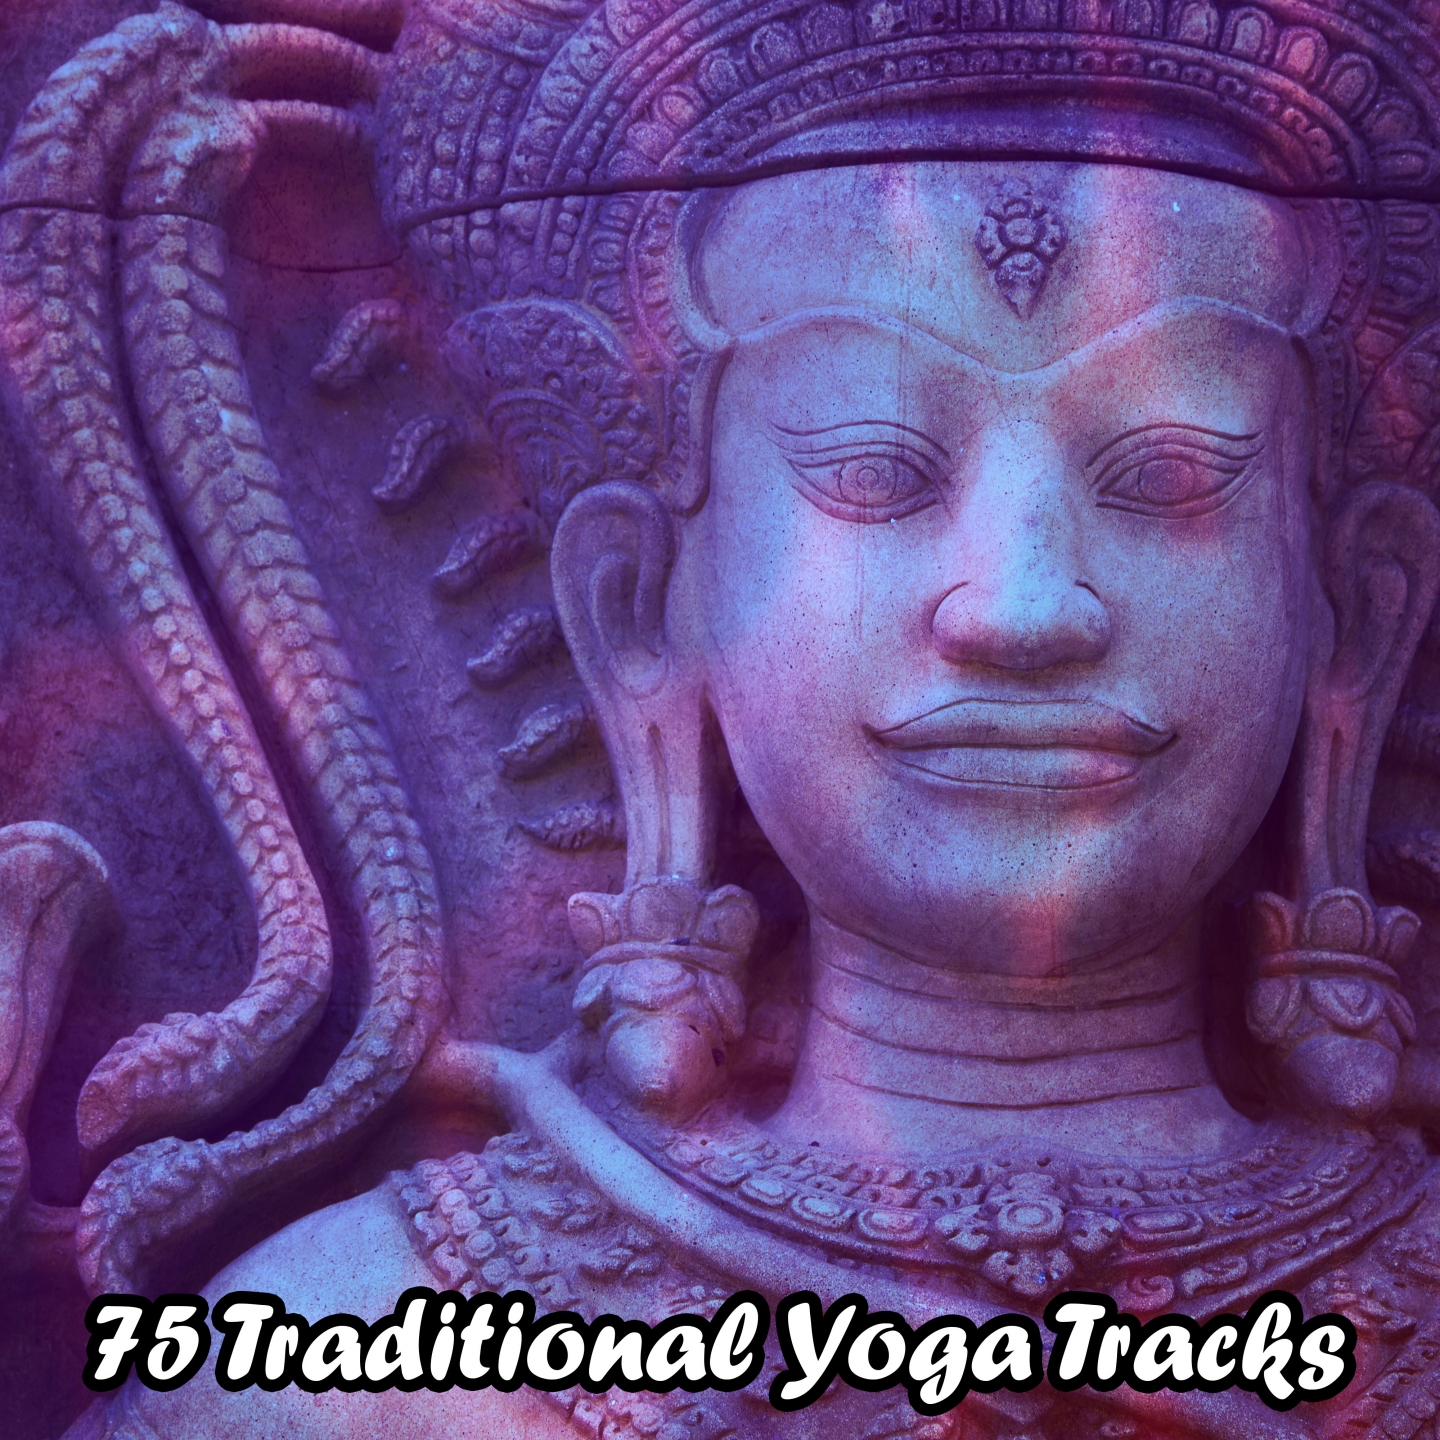 75 Traditional Yoga Tracks